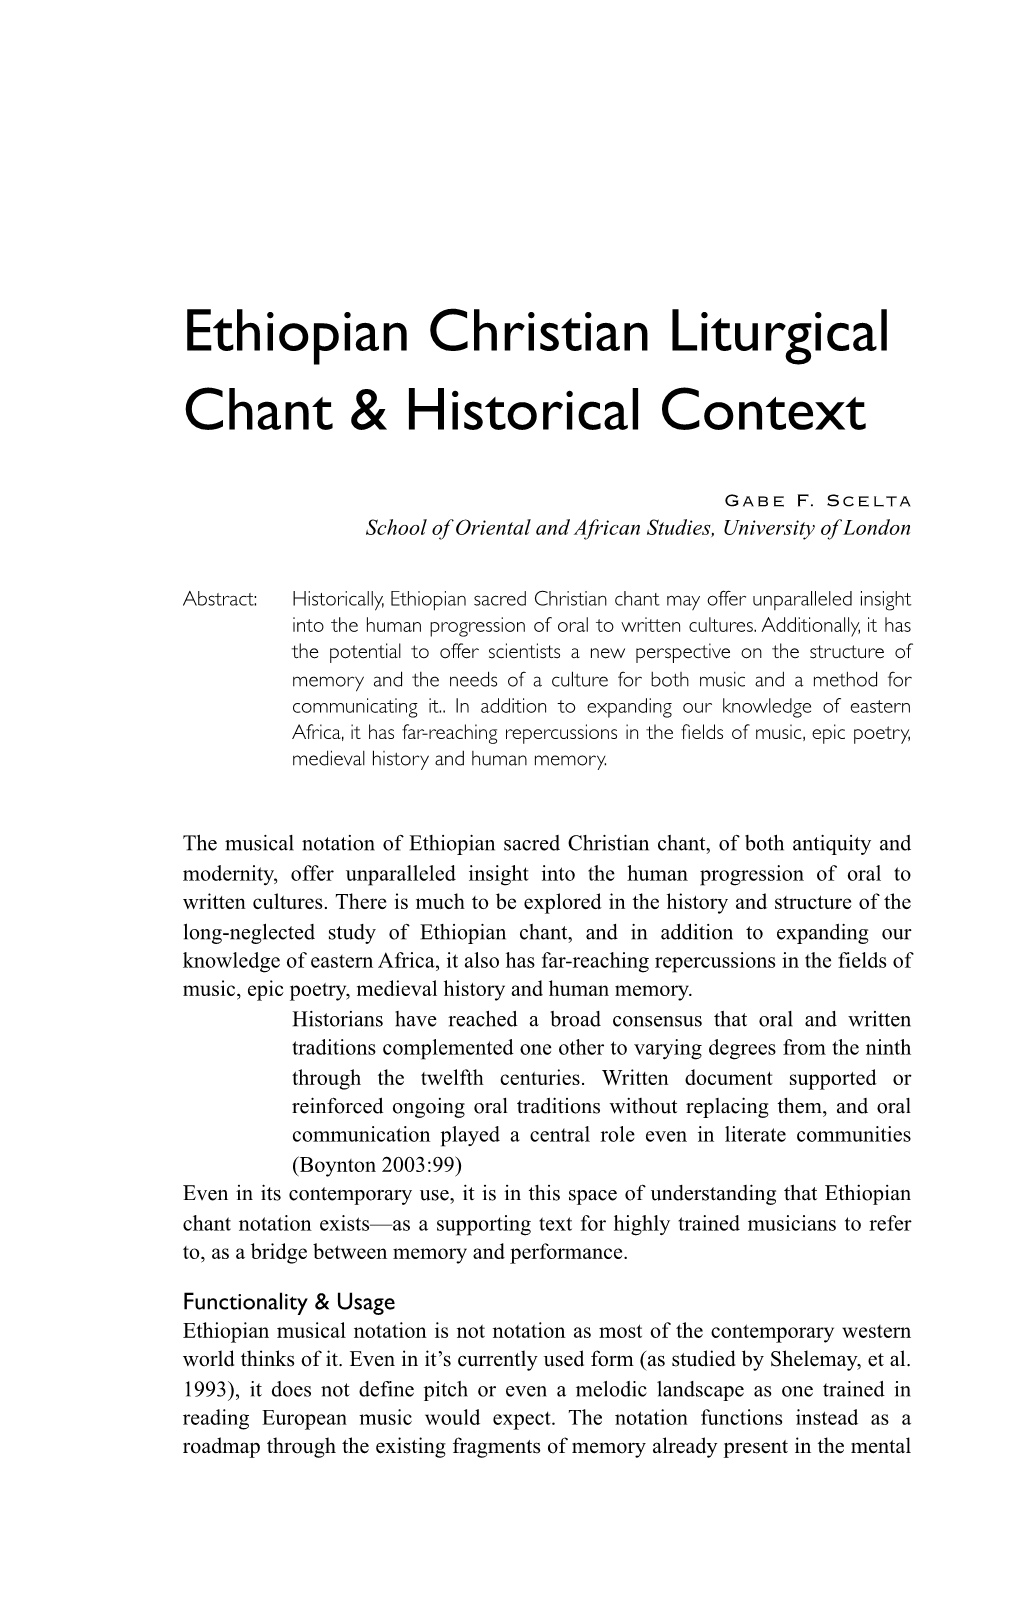 Ethiopian Christian Liturgical Chant & Historical Context